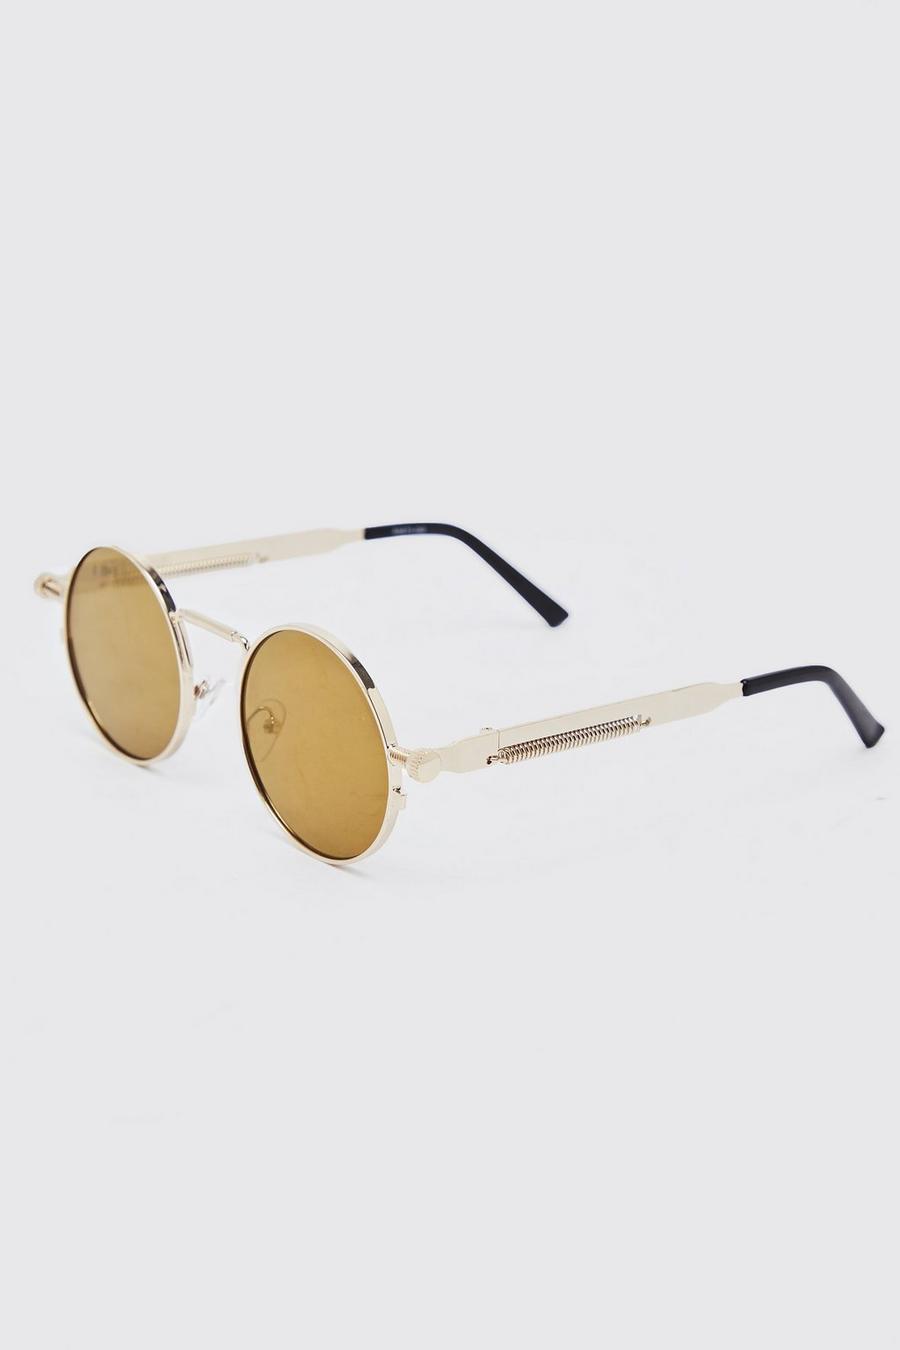 Gold Blenders Eyewear Rebel Roar Ridge Polarized Sunglasses